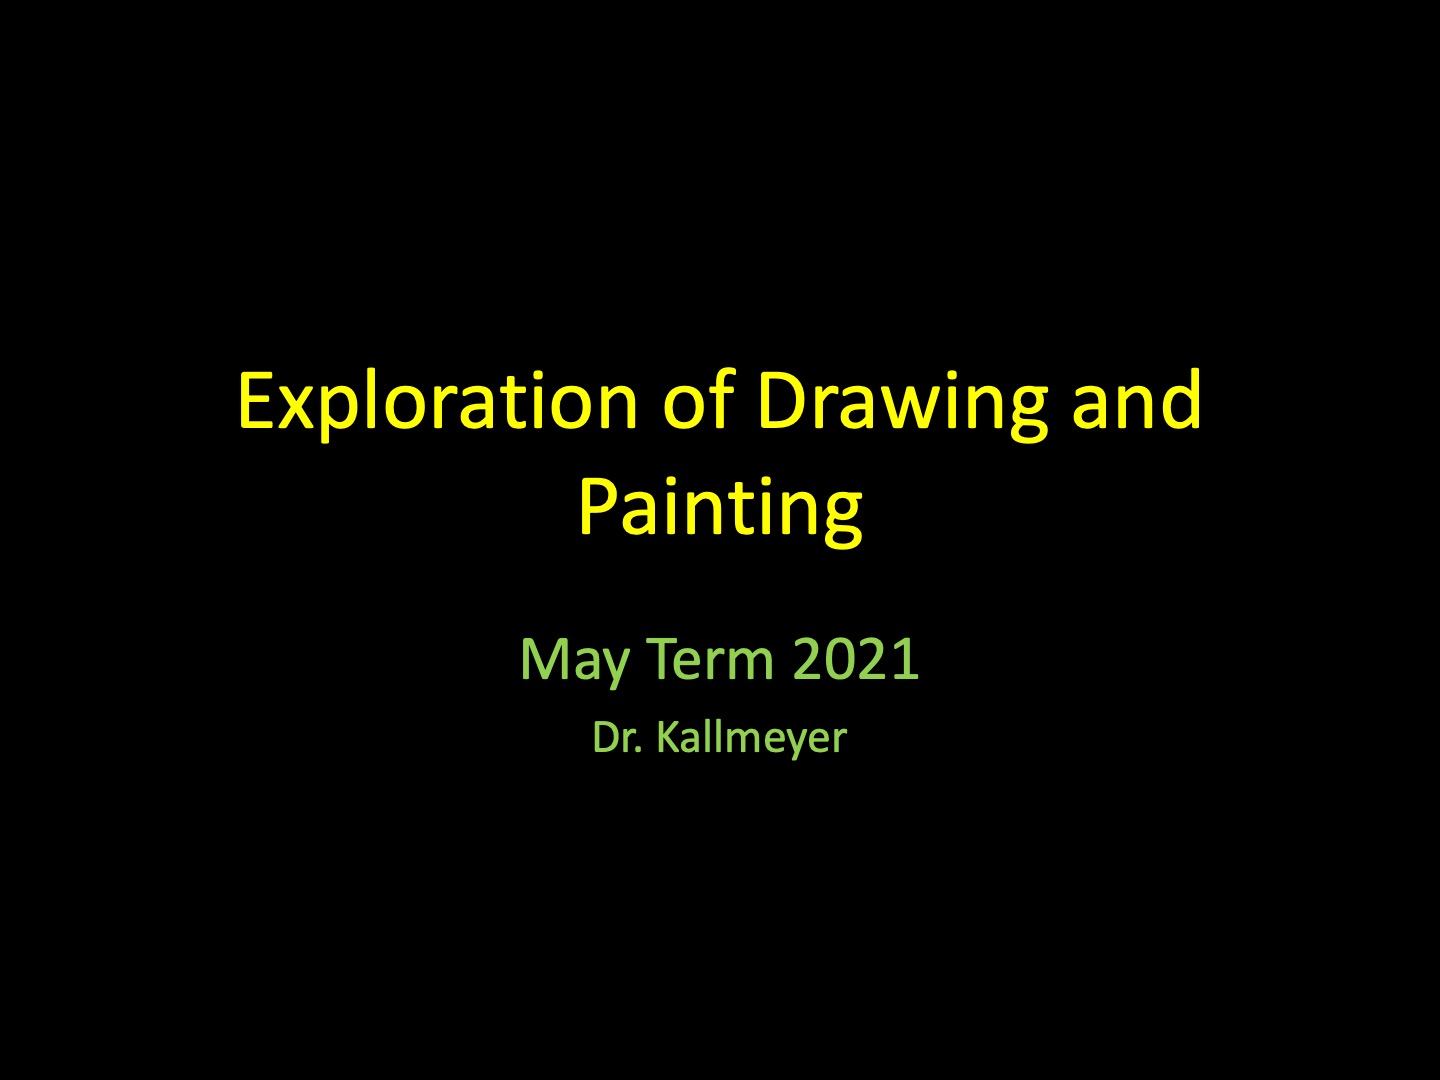 May Term Art Show Slide 1